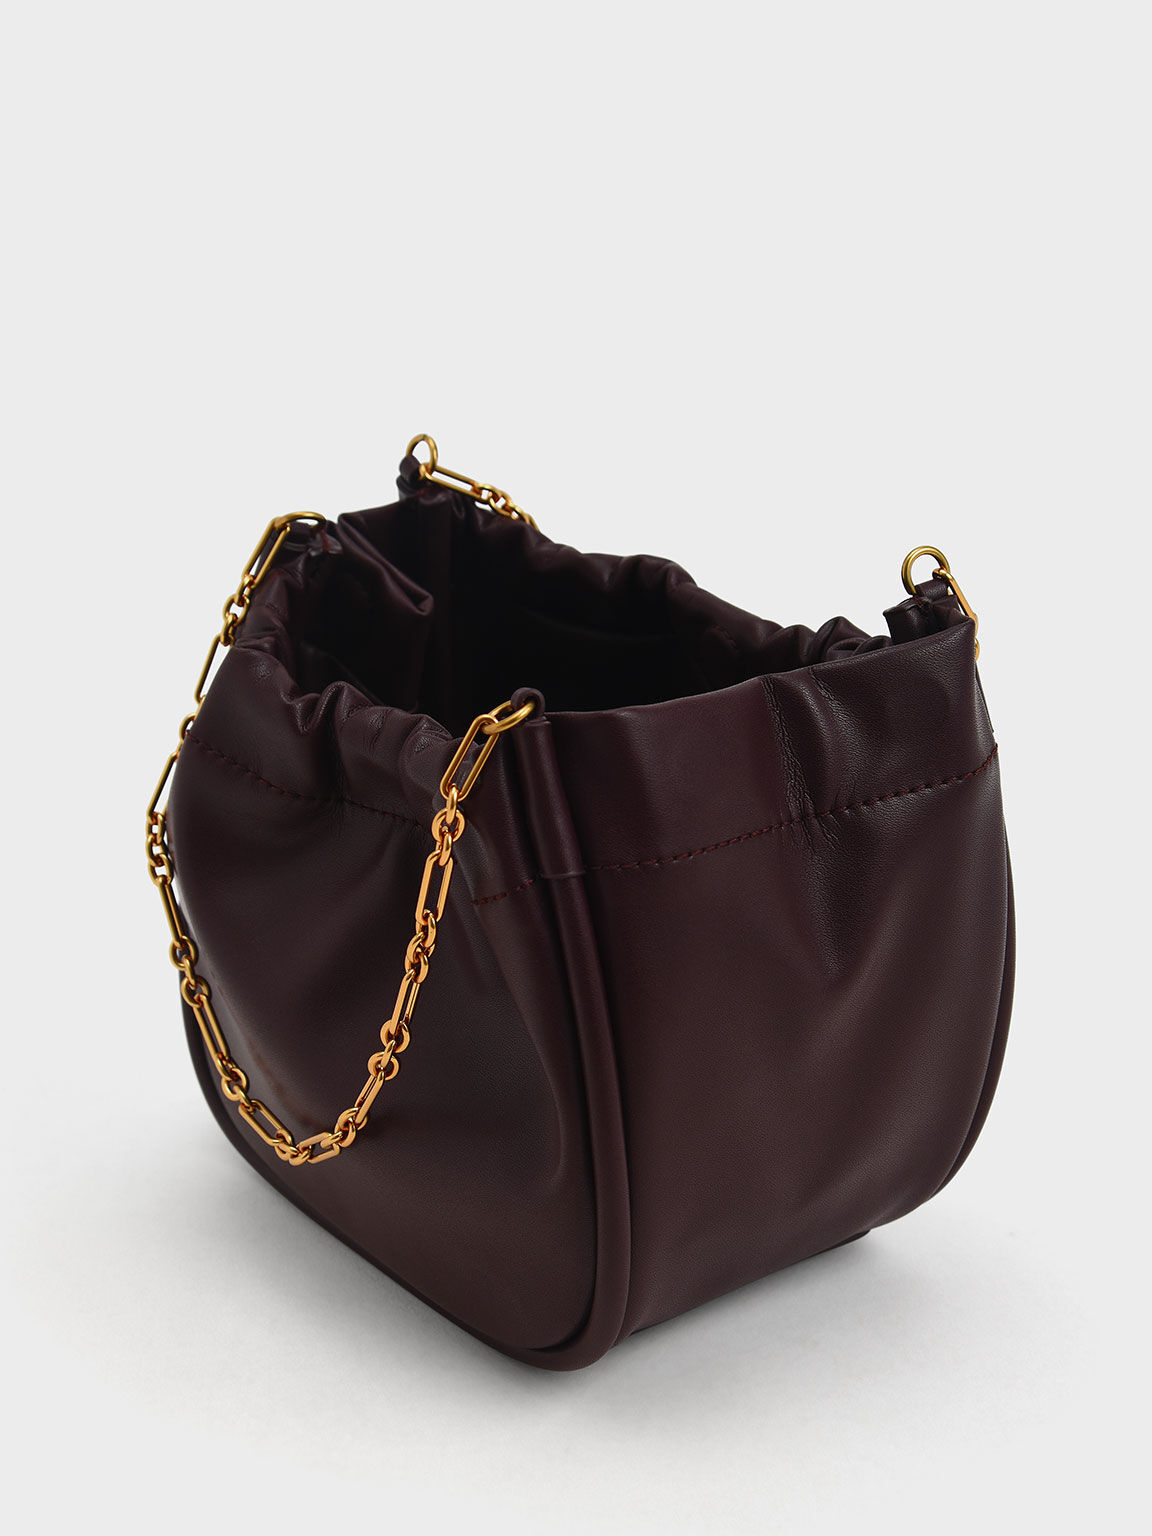 Solange Double Chain Handle Slouchy Bag, Dark Oak, hi-res